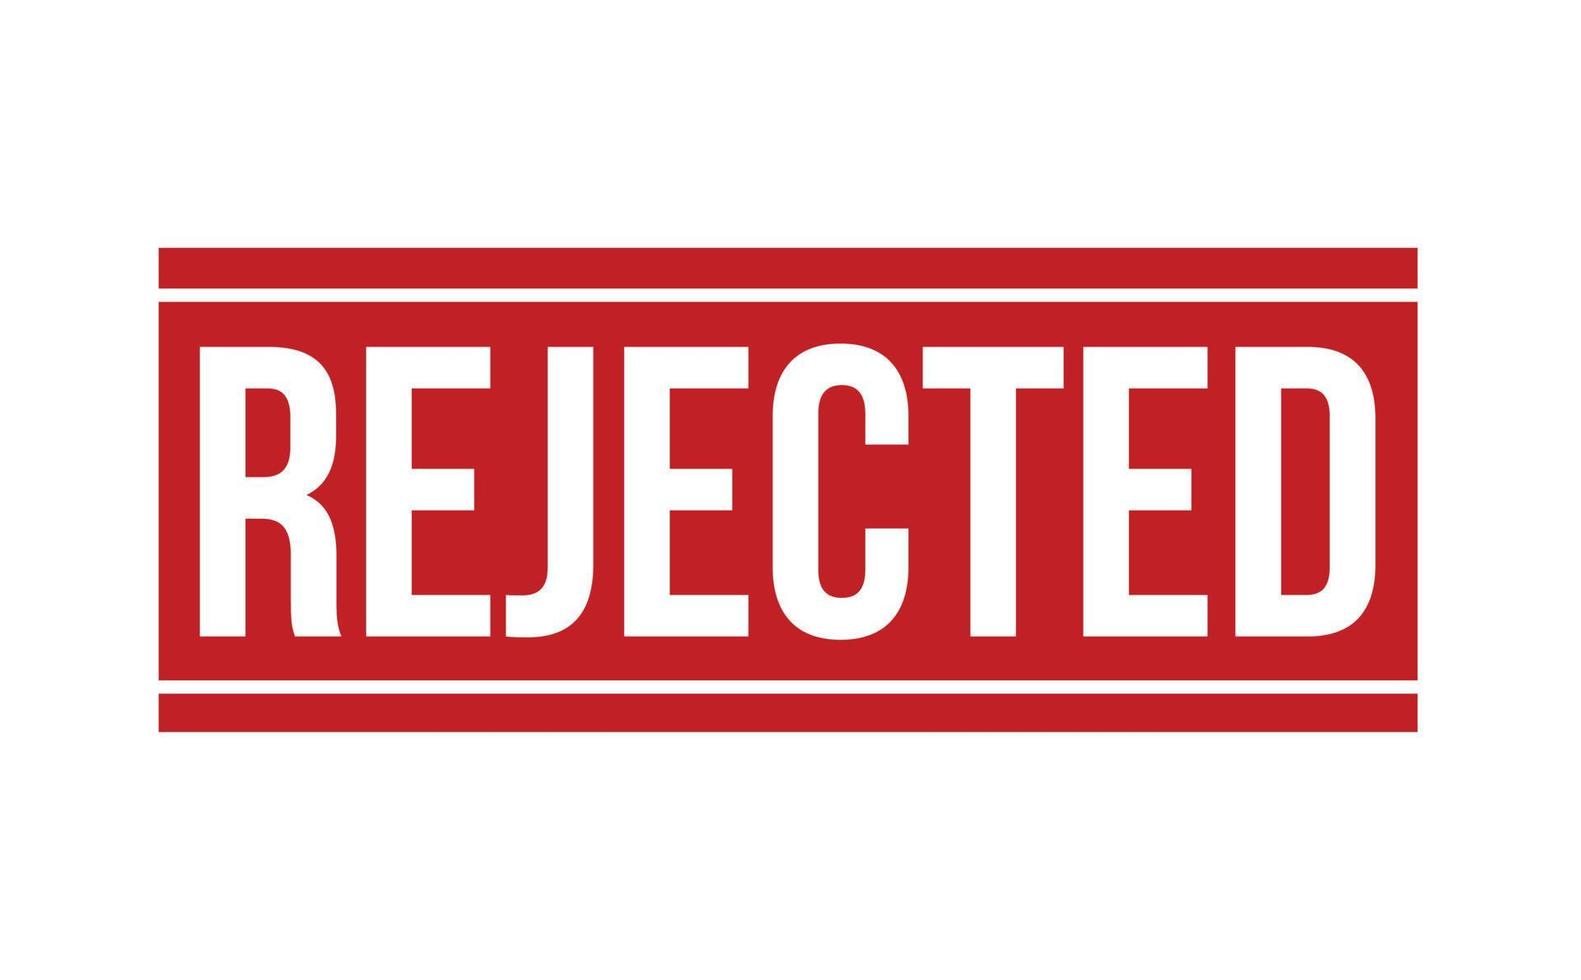 Rejected Rubber Stamp. Red Rejected Rubber Grunge Stamp Seal Vector Illustration - Vector